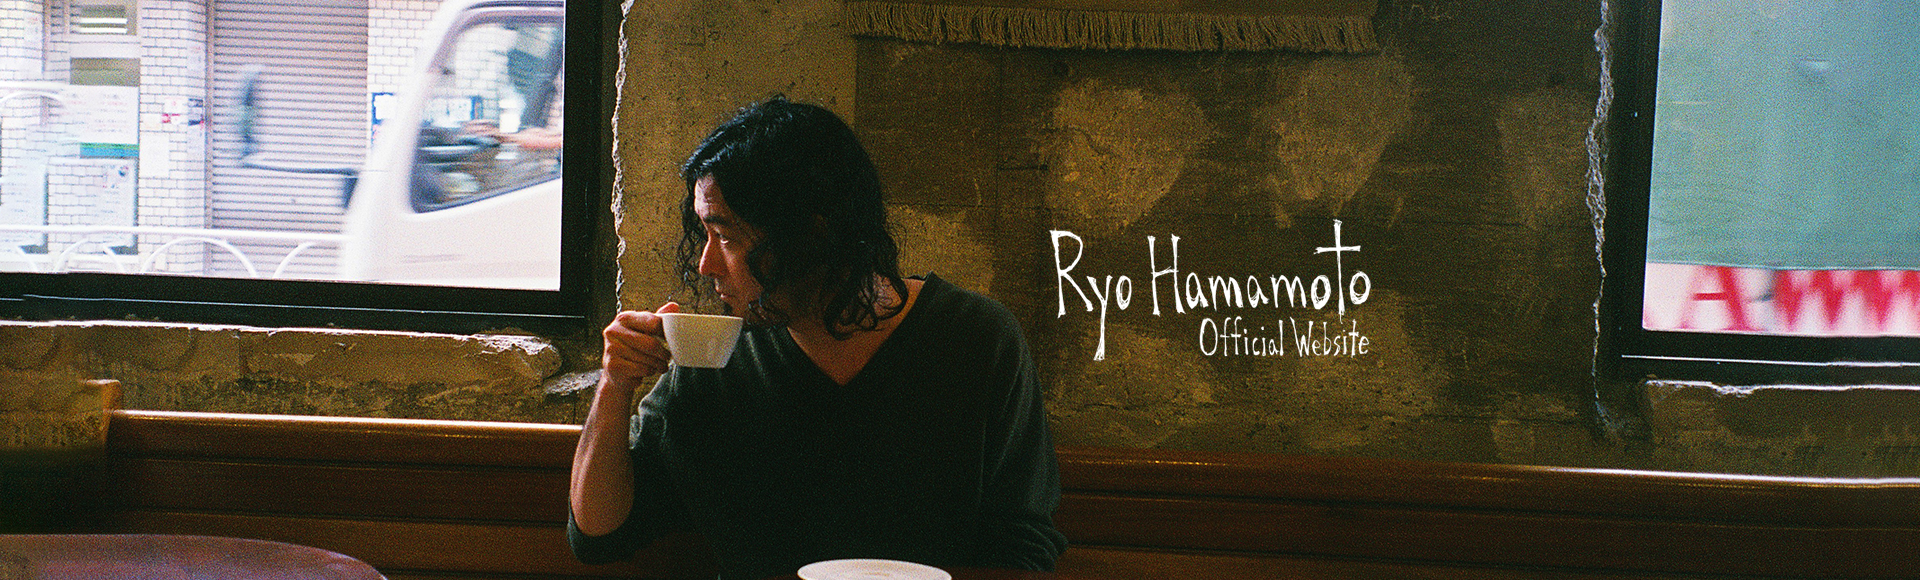 Ryo Hamamoto Official Website